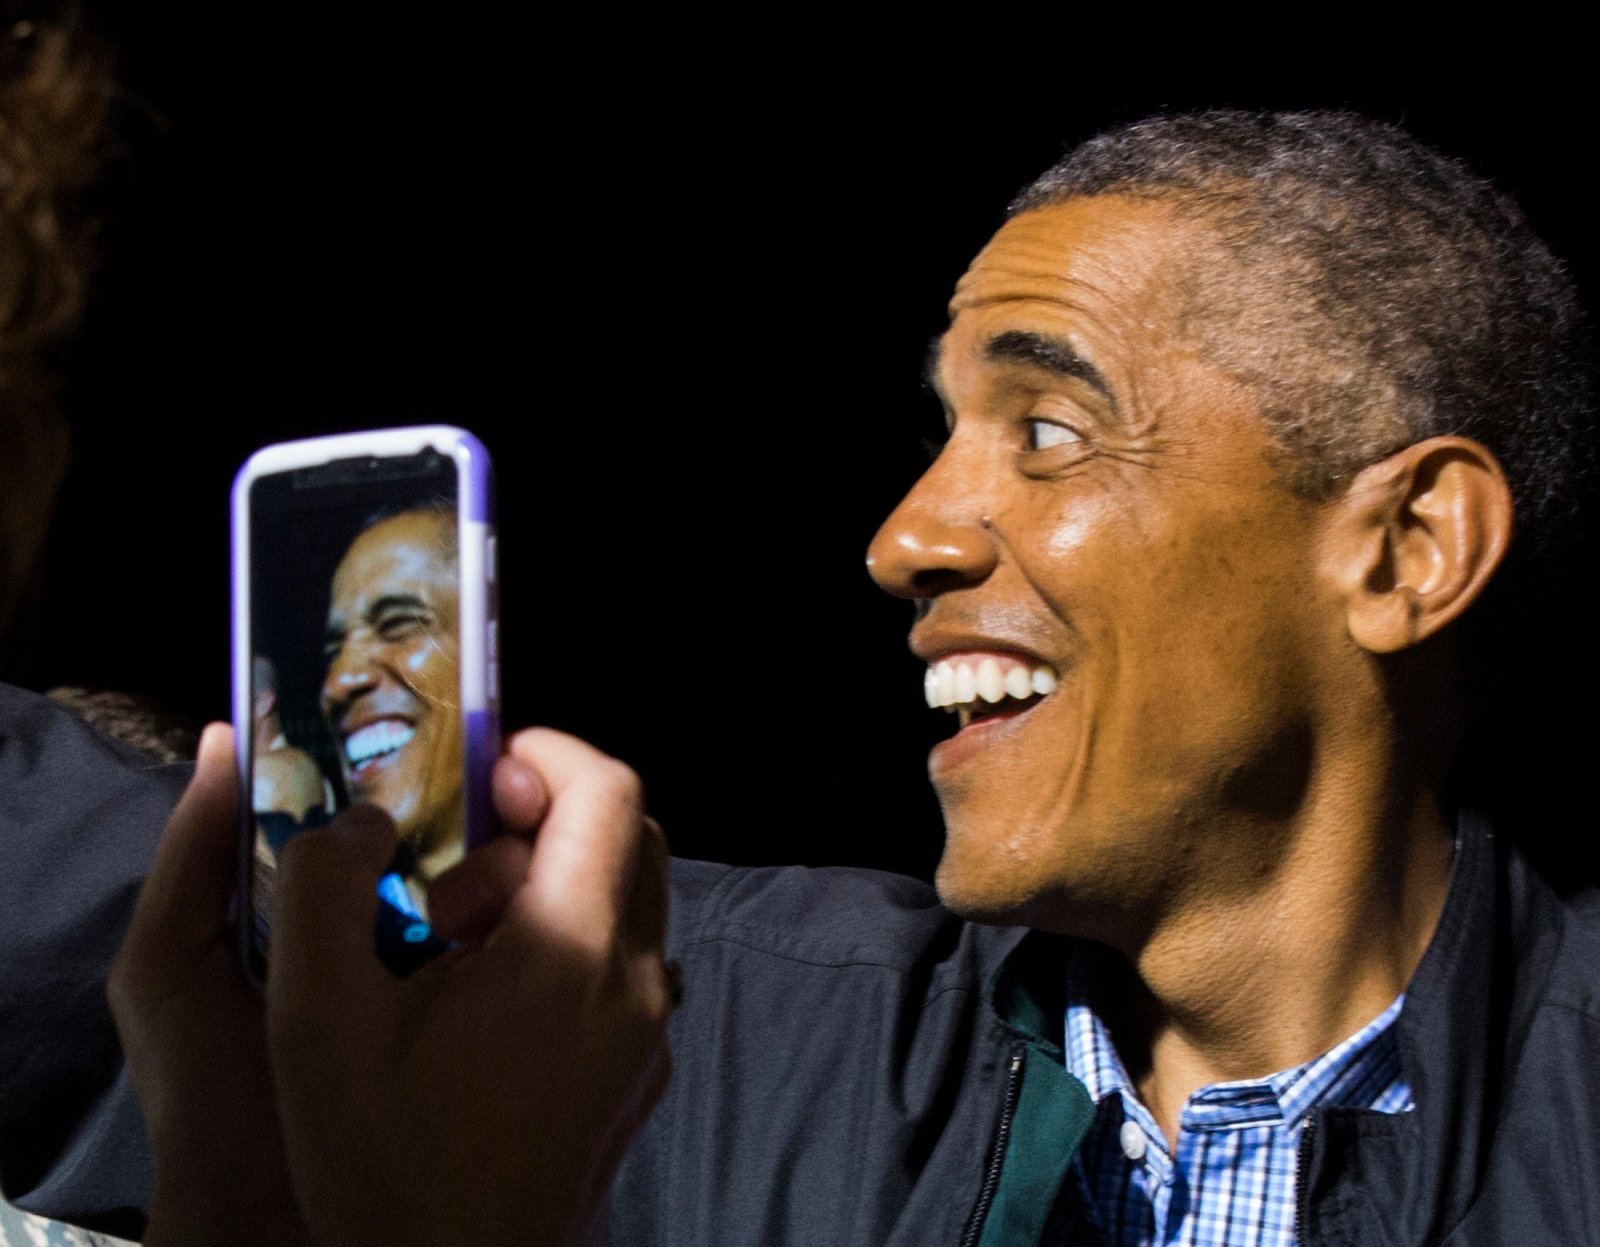 Obama Reuters/Kevin Lamarque